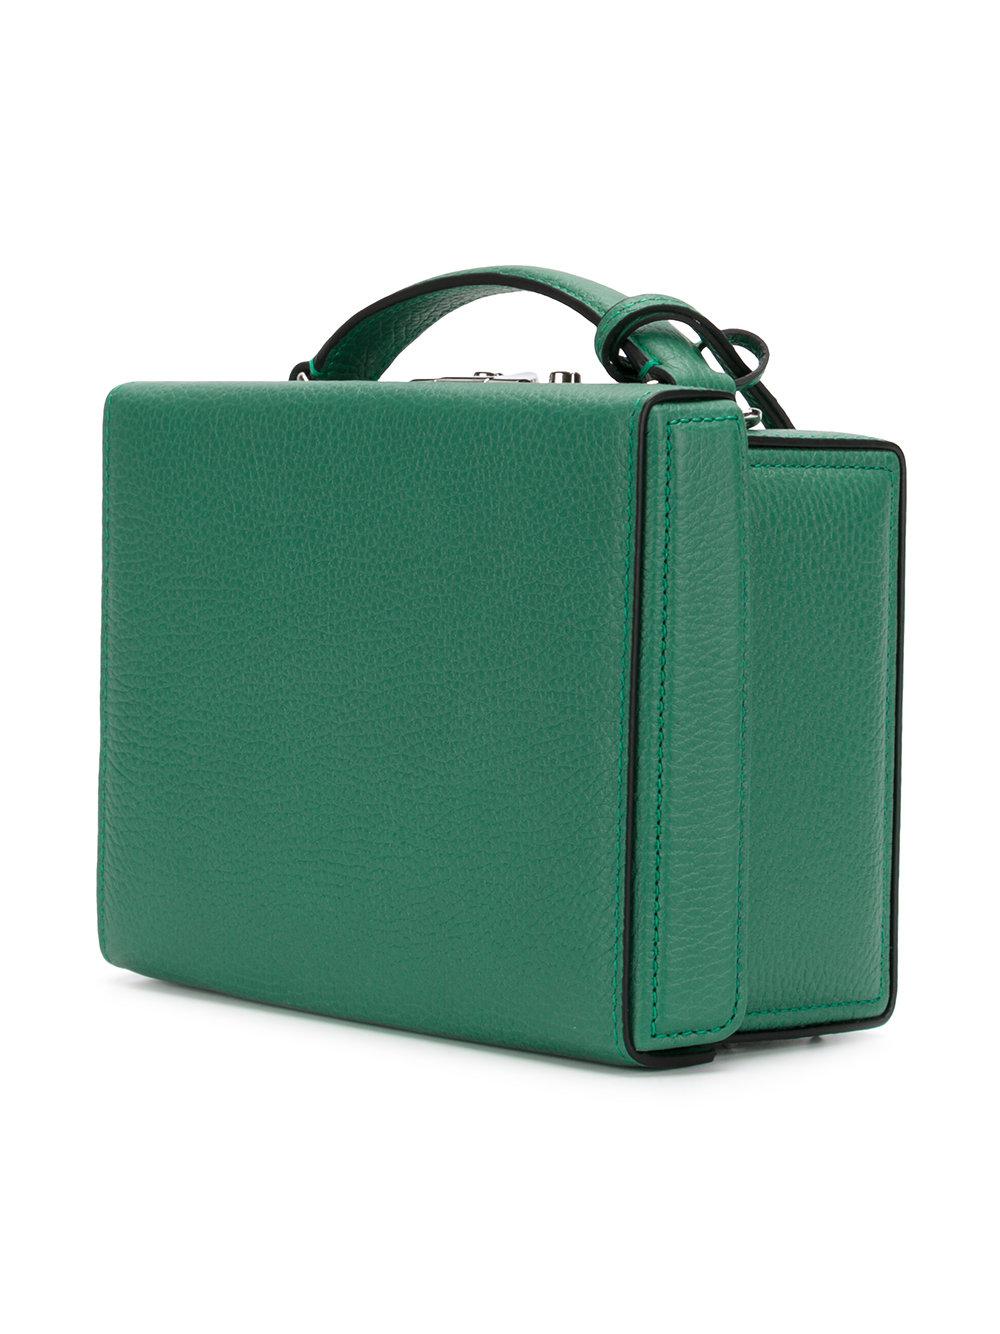 Lyst - Mark Cross Mini Briefcase Bag in Green